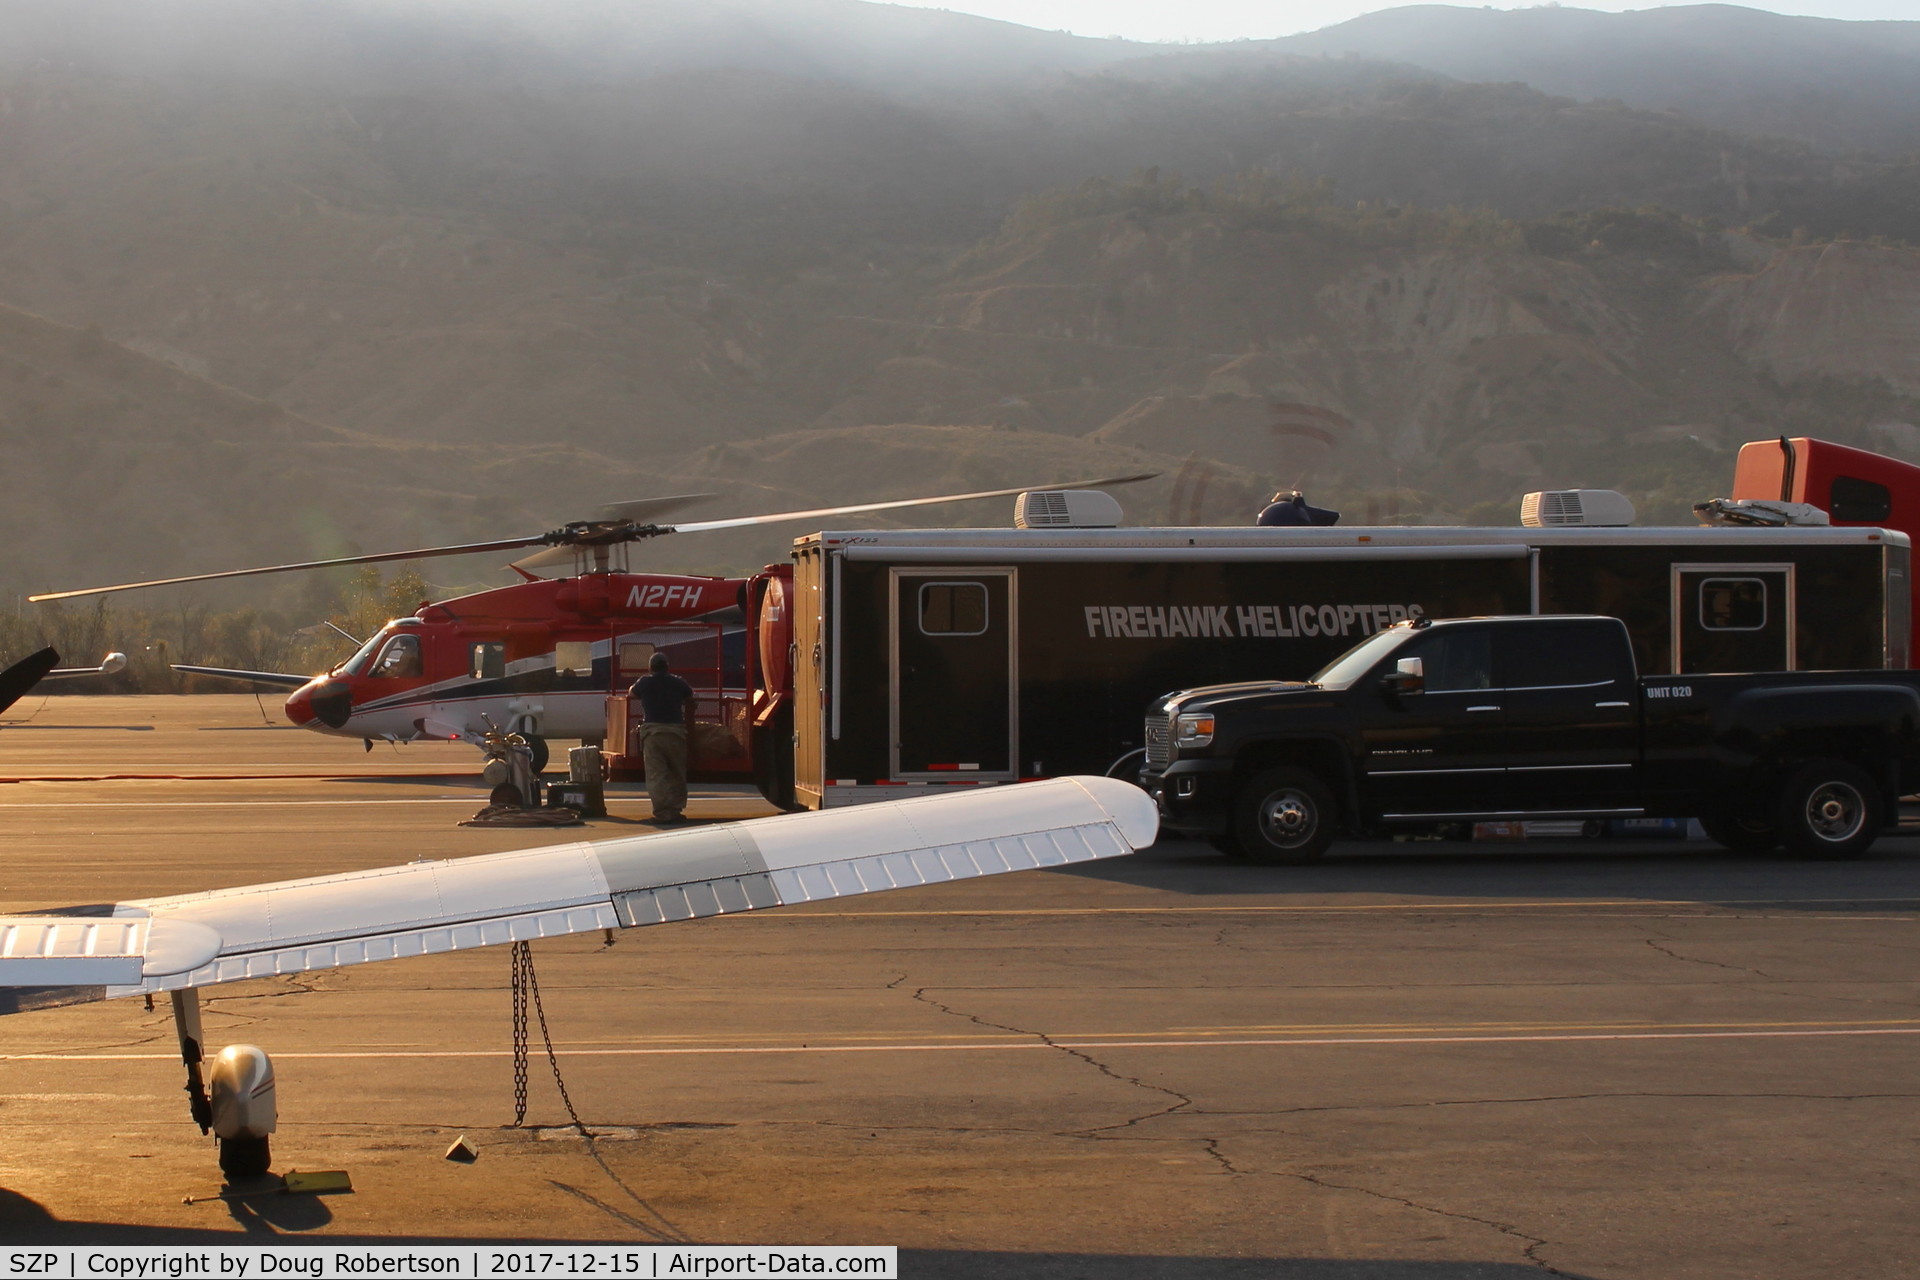 Santa Paula Airport (SZP) - N2FH Firebomber and associated support equipment for the huge, destructive Thomas Fire.